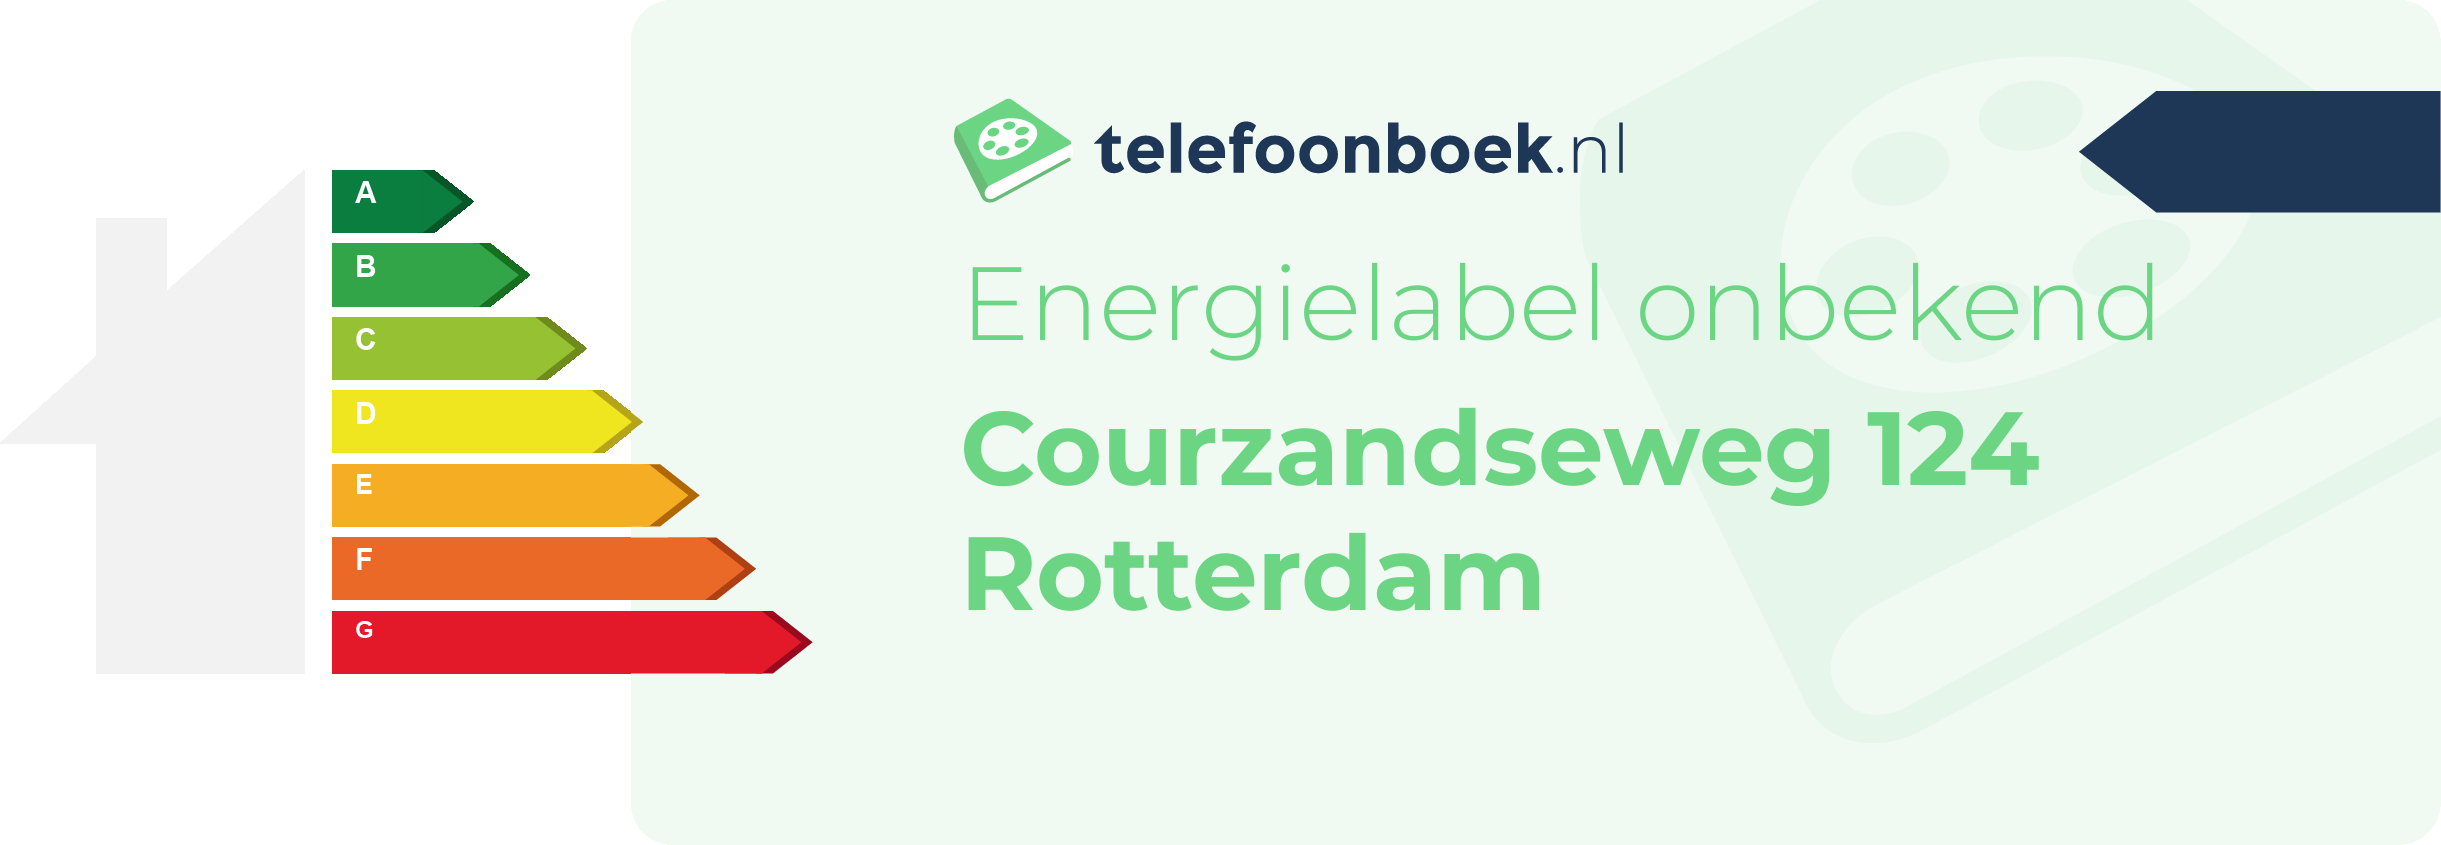 Energielabel Courzandseweg 124 Rotterdam